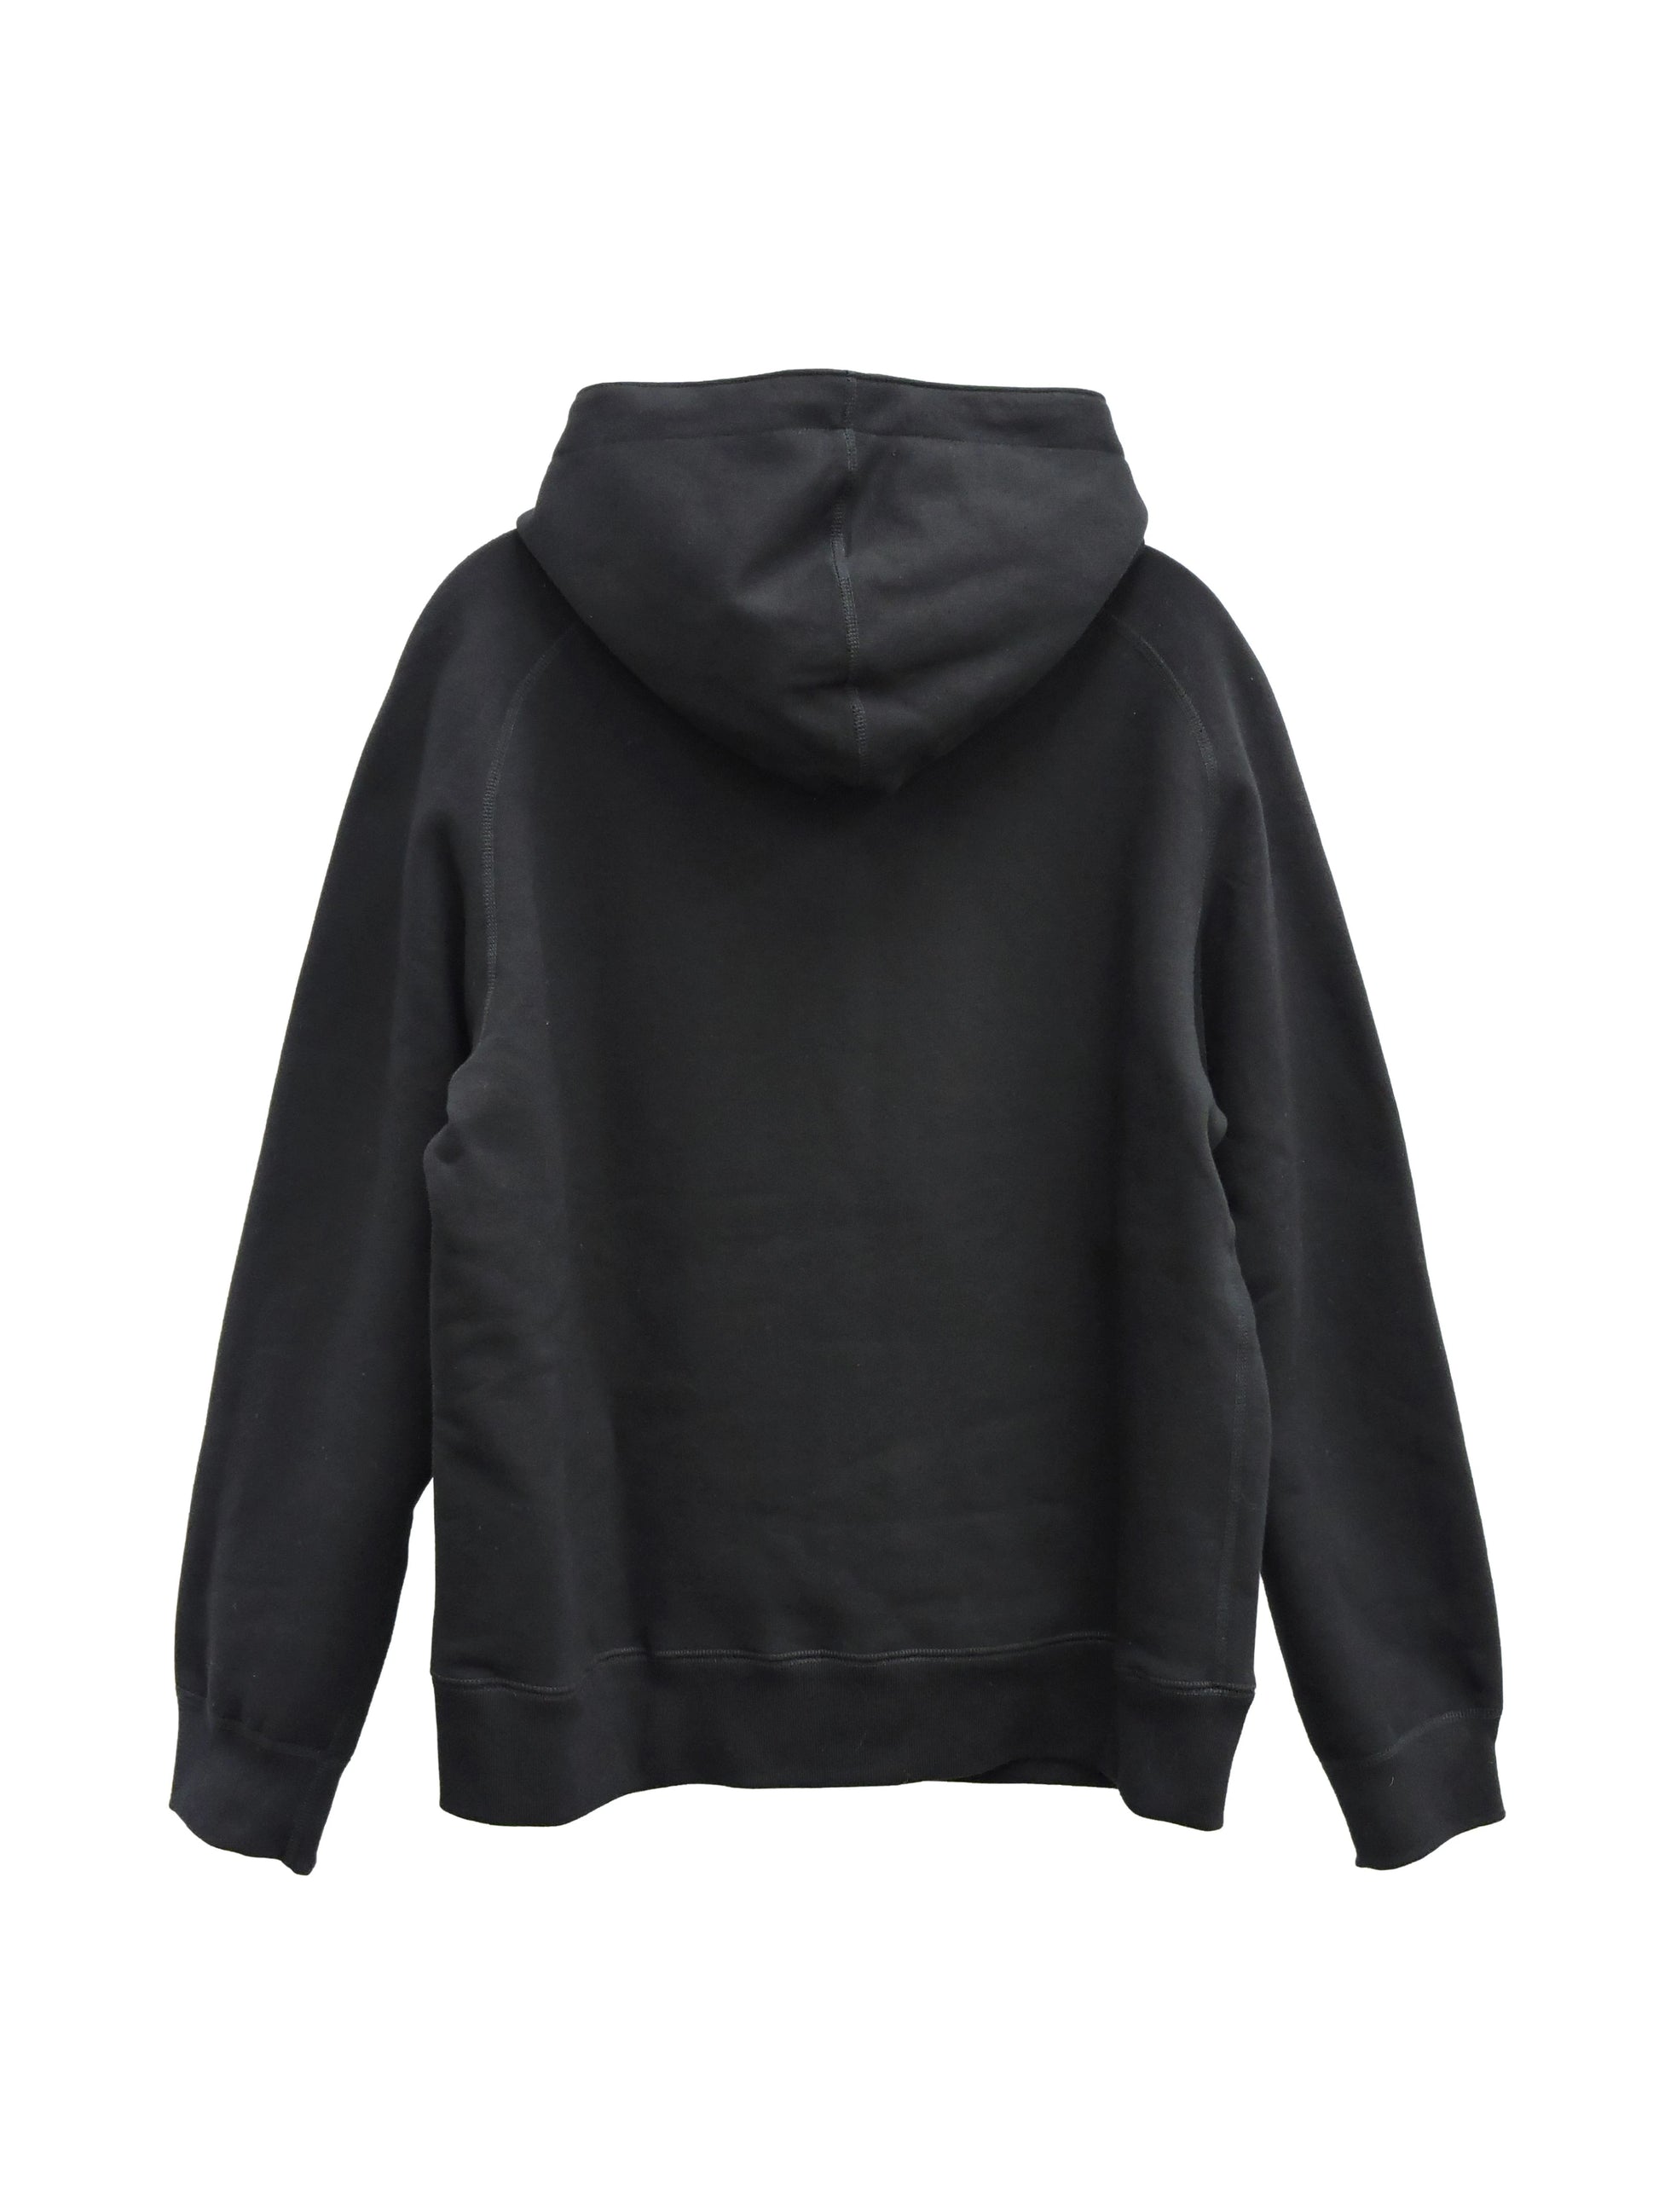 Back of fleece black hoodie